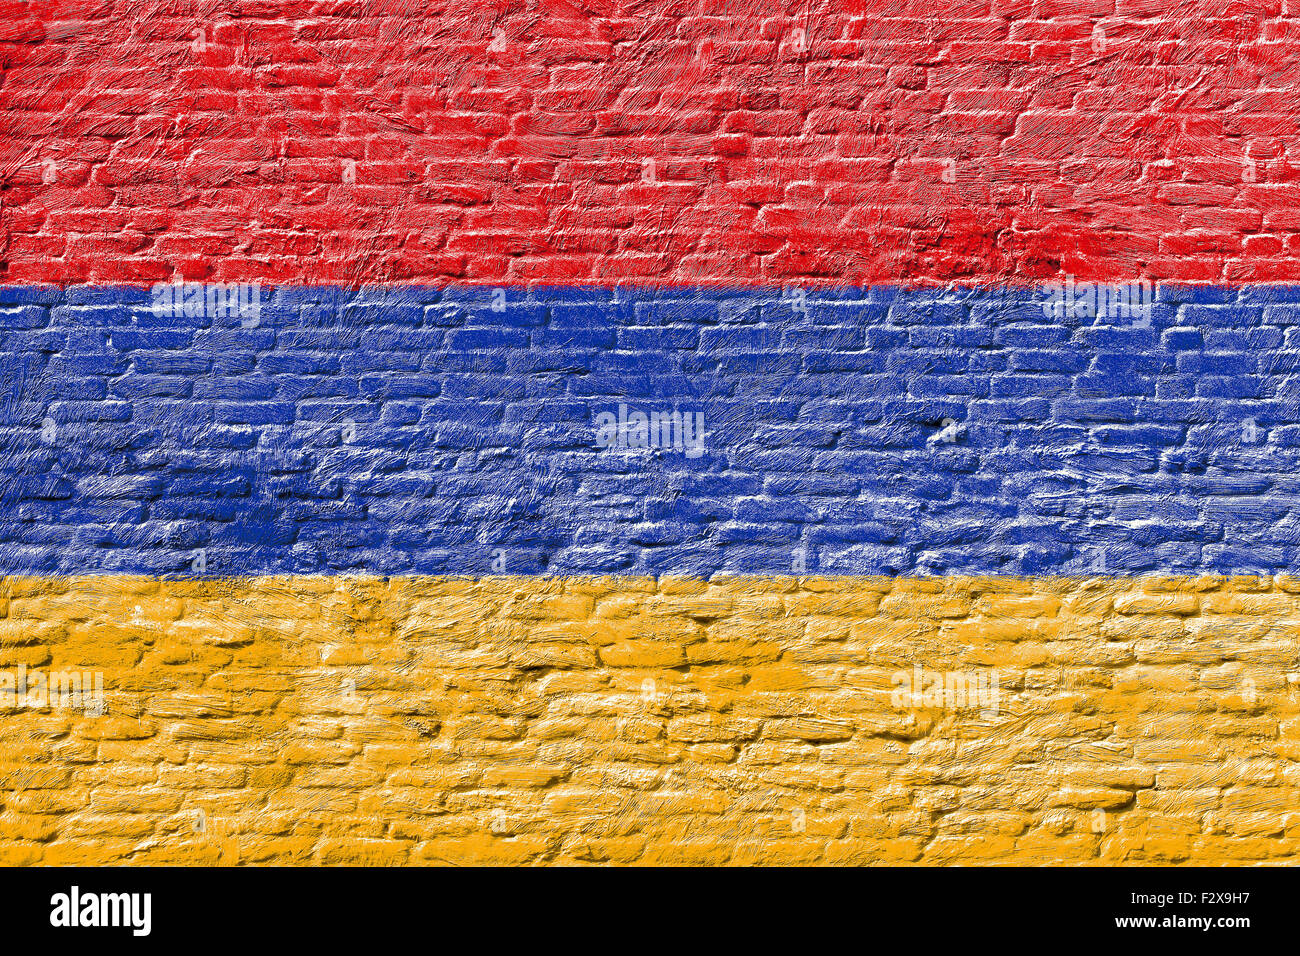 Armenia - National flag on Brick wall Stock Photo